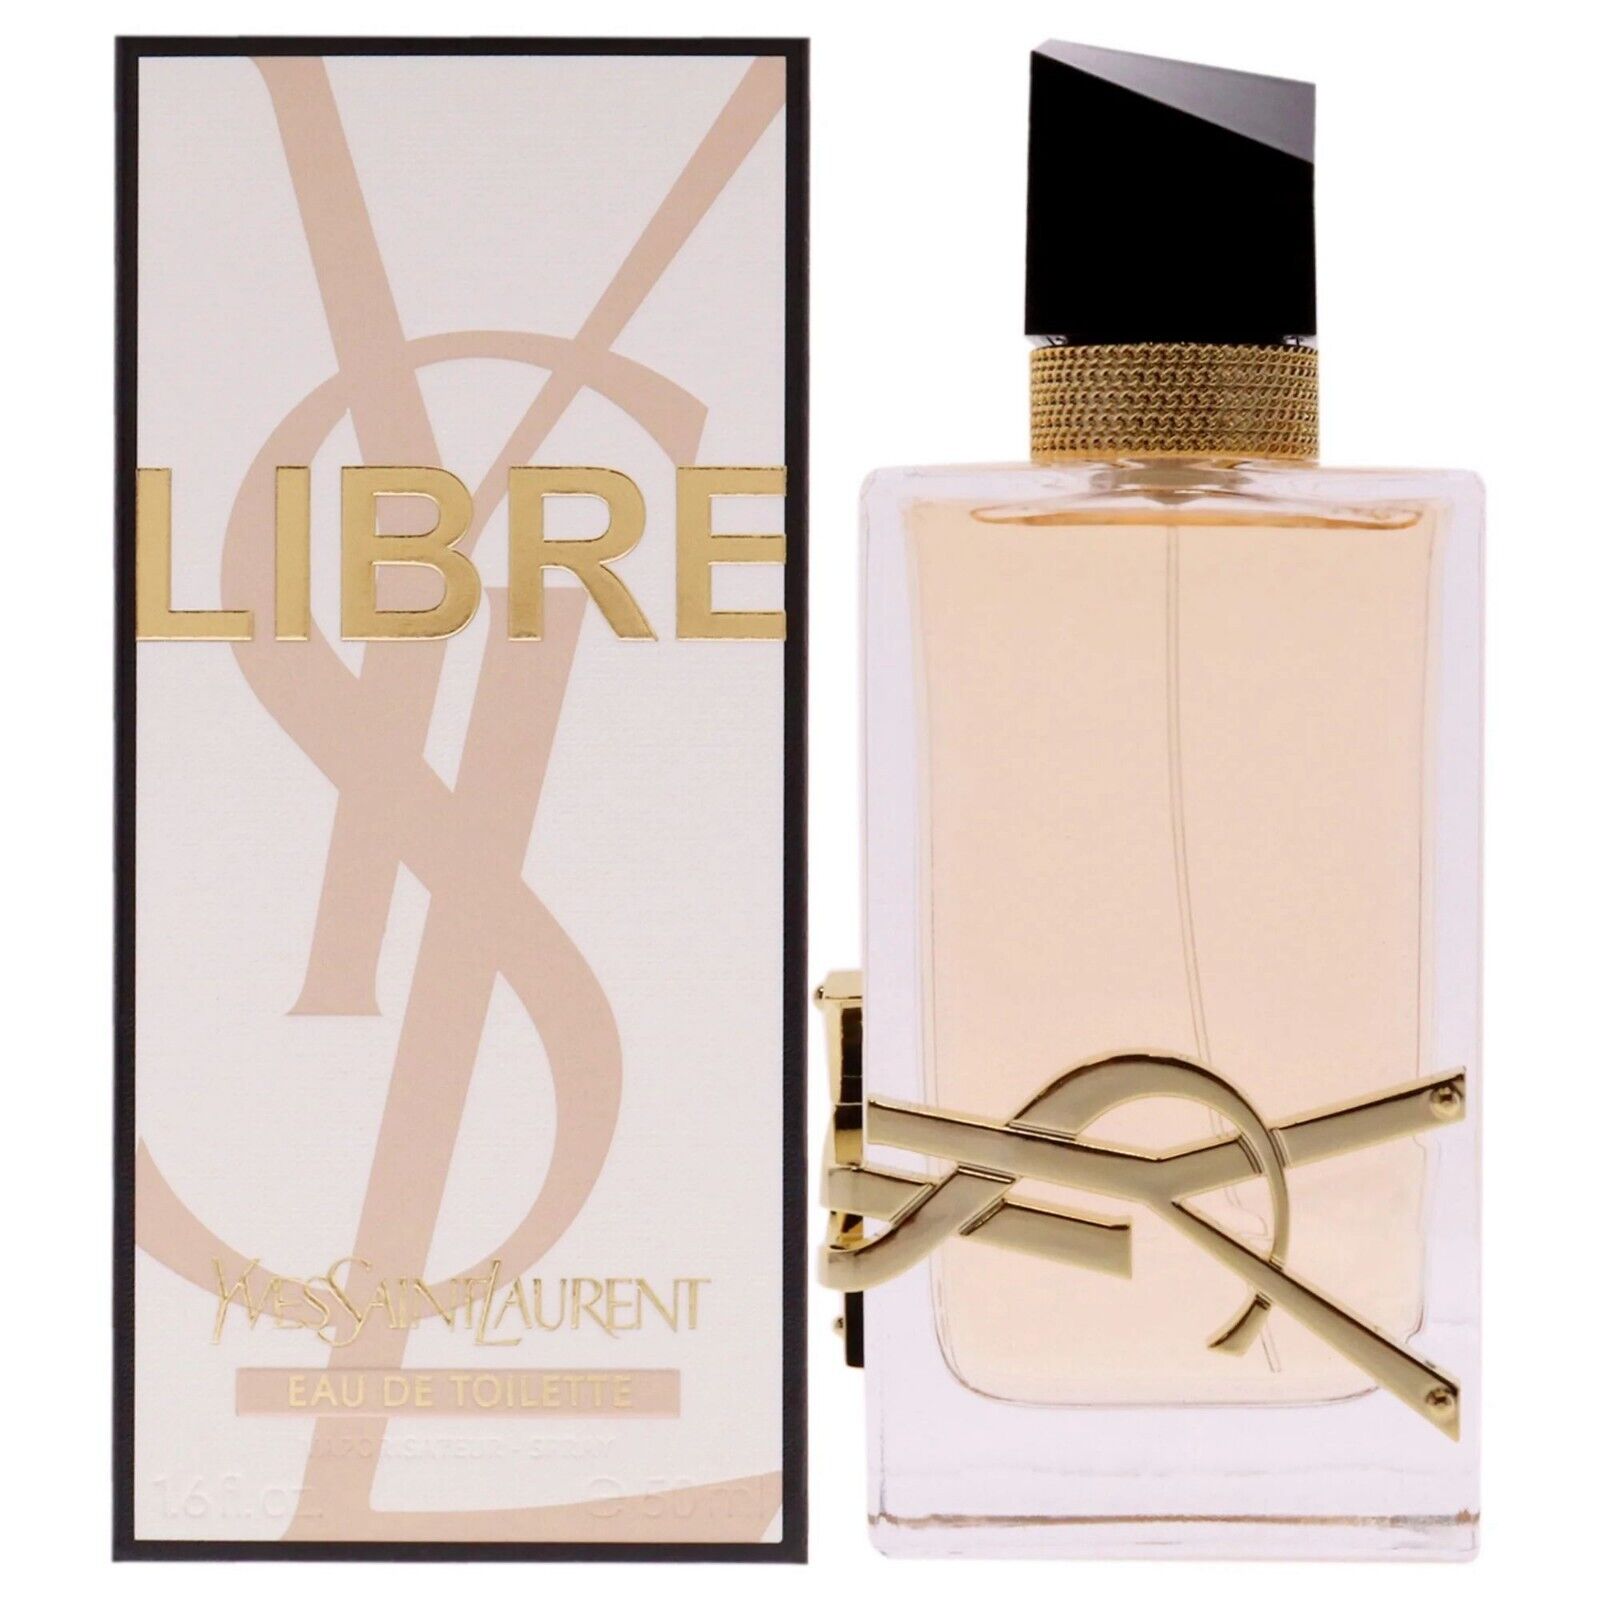 New Libre Eau De Toilette Perfume for Women Ysl EDT Spray 3fl oz/90ml Sealed box